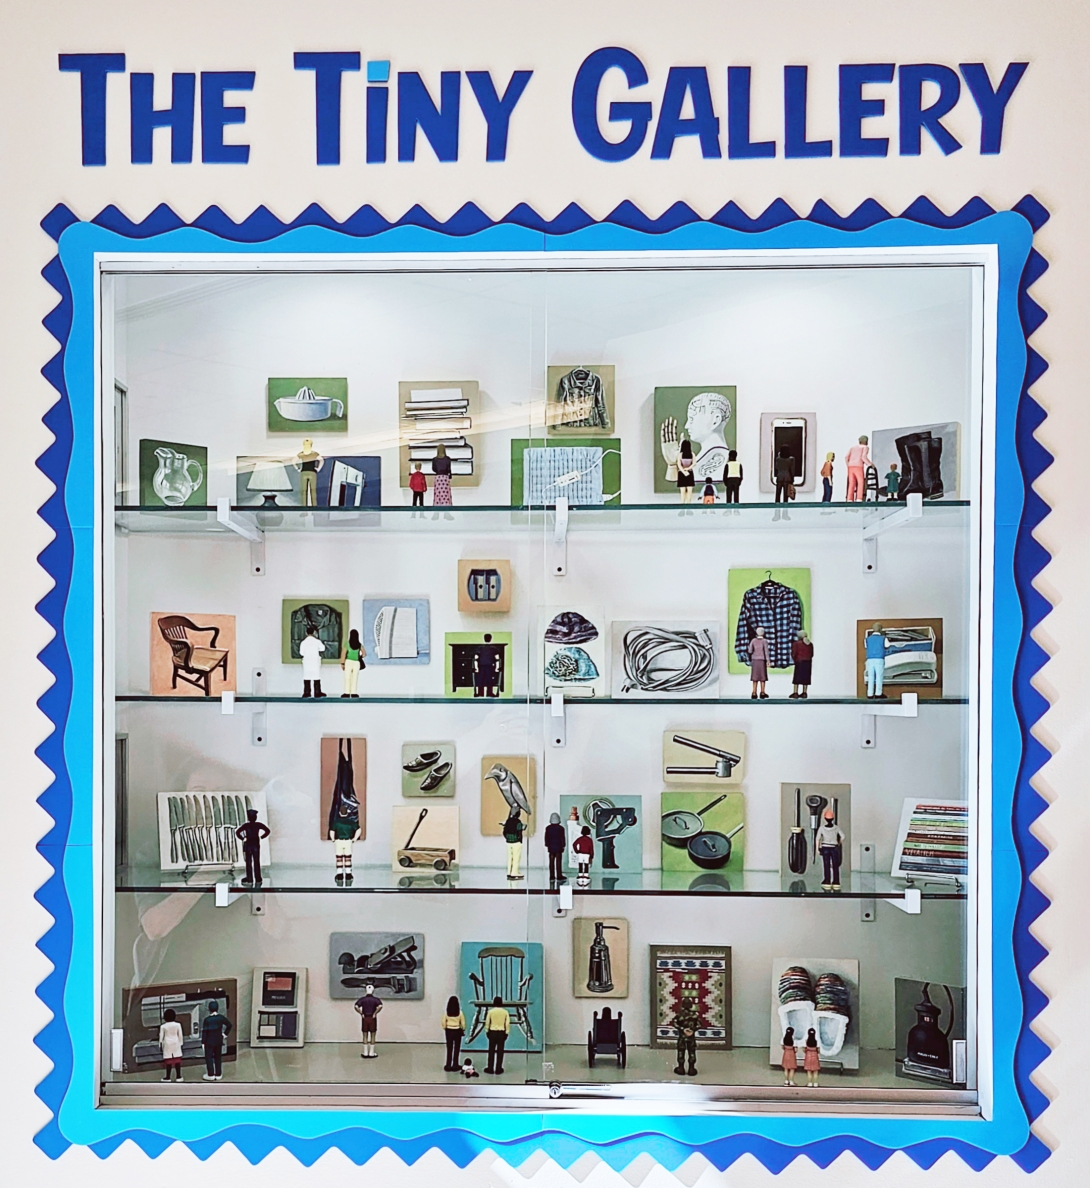 The Tiny Gallery